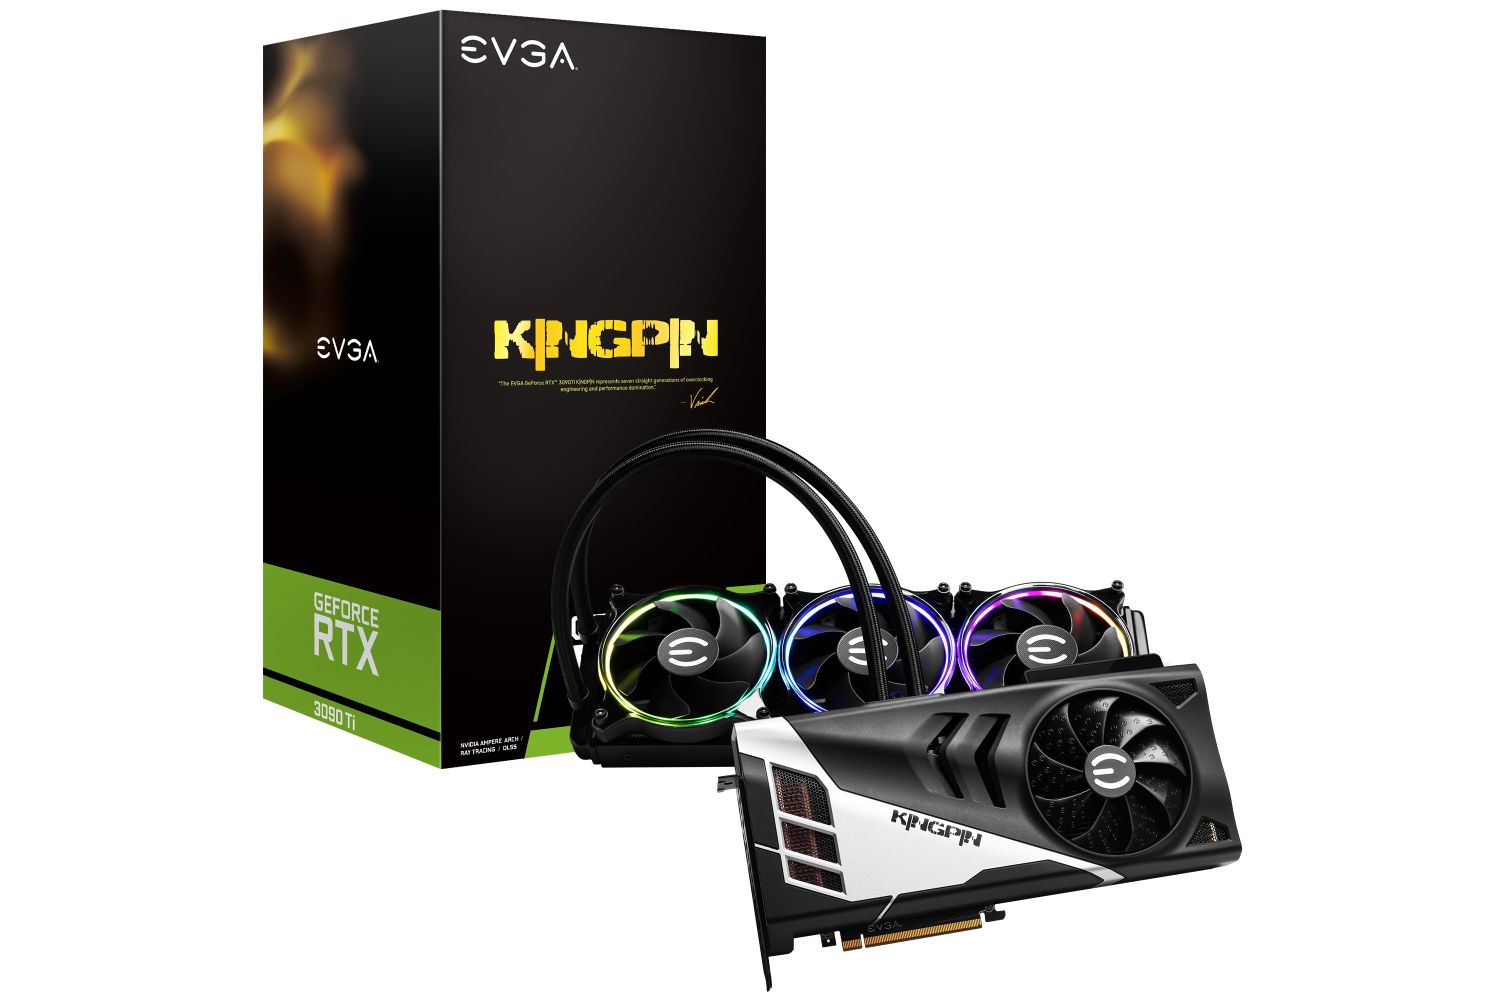 EVGA GeForce RTX 3090 Ti KINGPIN Will Cost A Whopping US$2500 